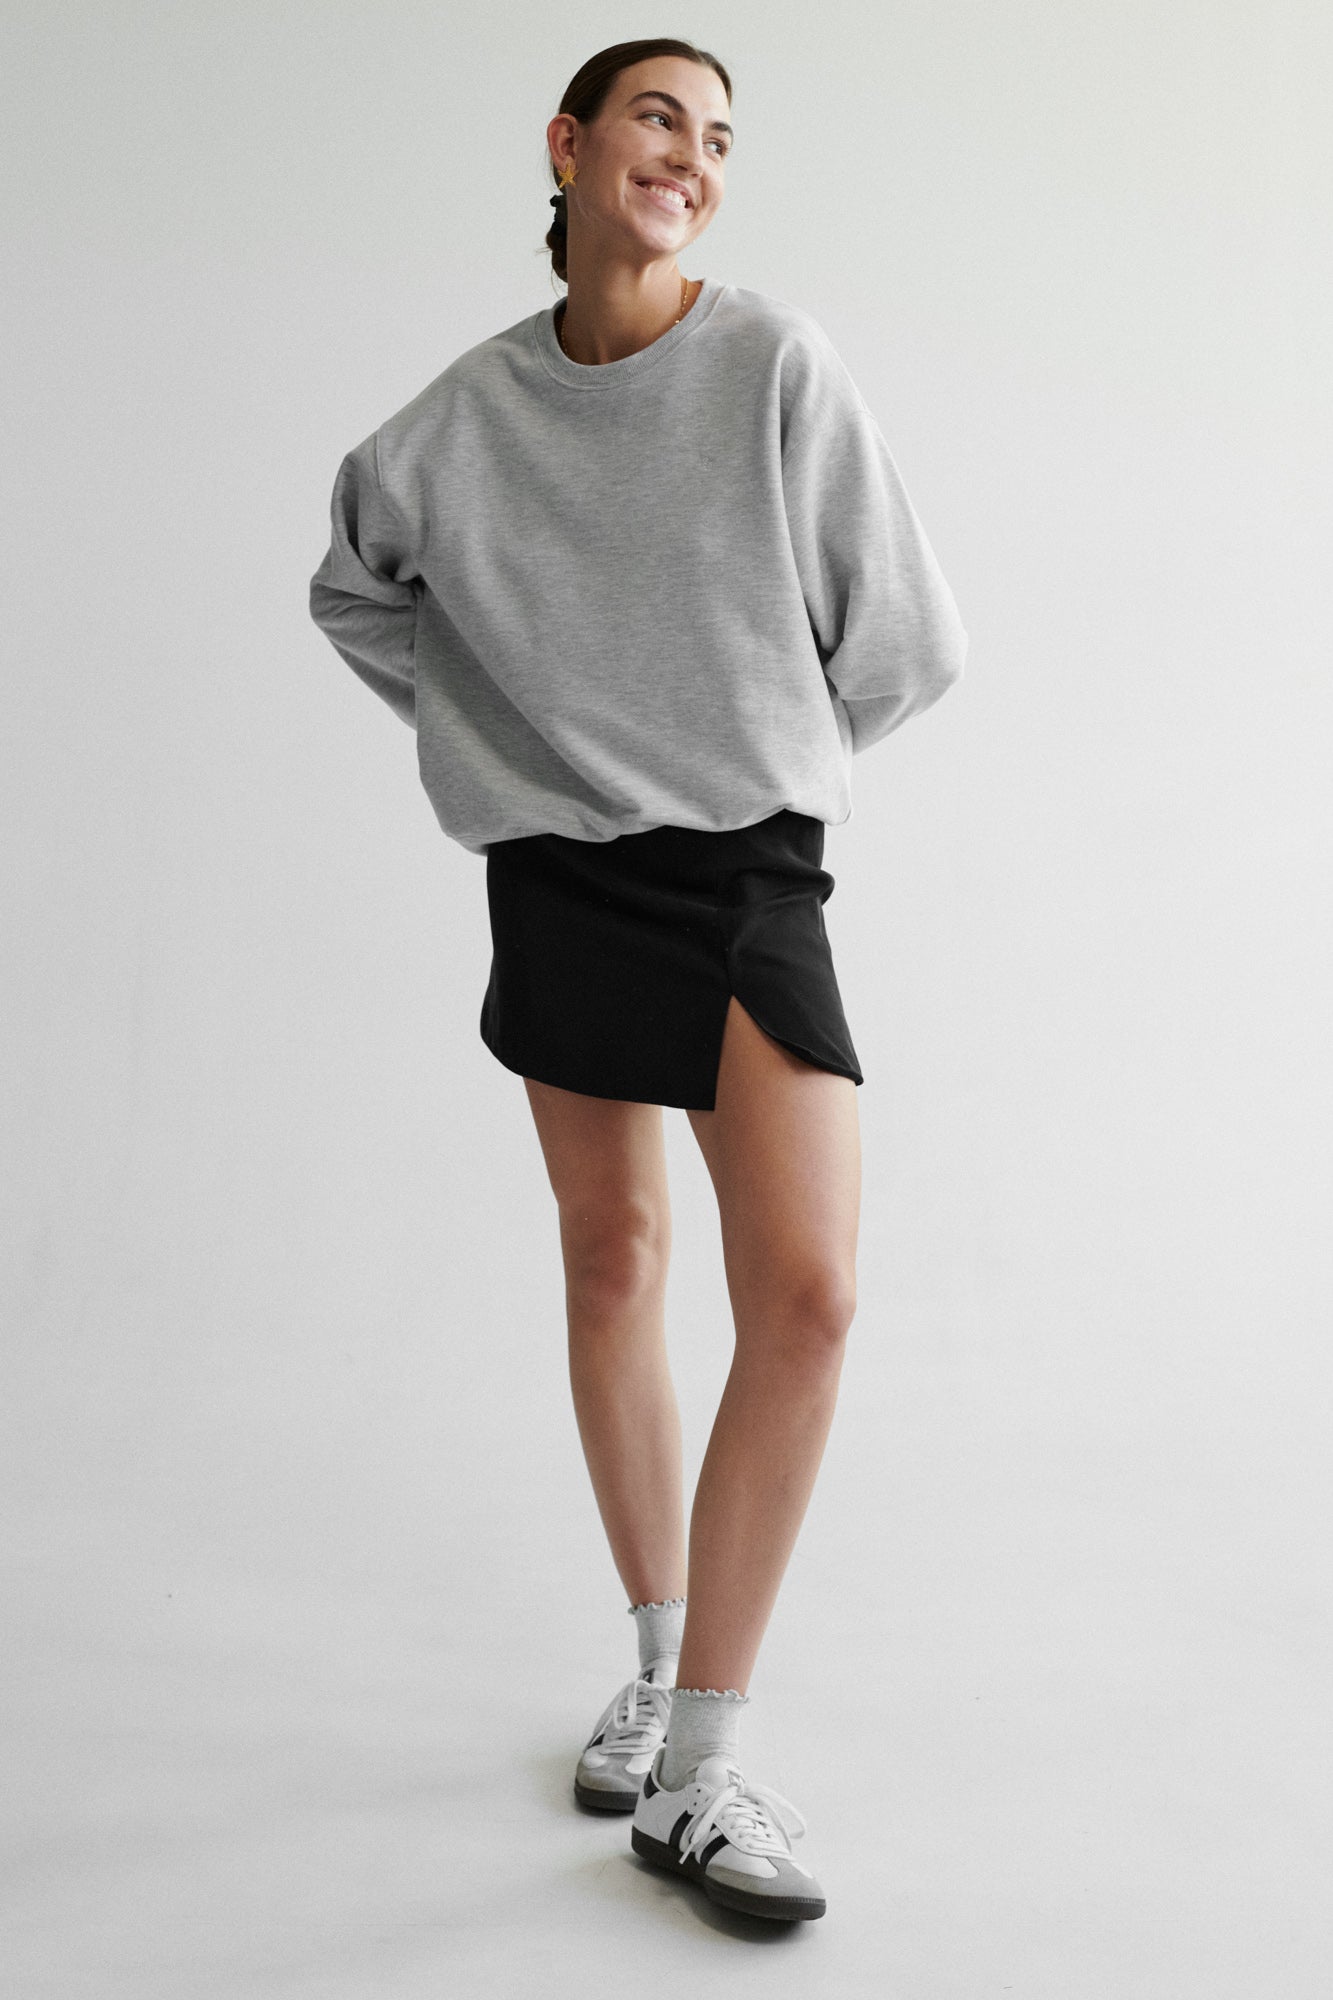 Sweatshirt in cotton / 17 / 16 / mist grey / monogram *fine-tencel-skirt-07-02-onyx-black*?The model is 178 cm tall and wears size XS/S?